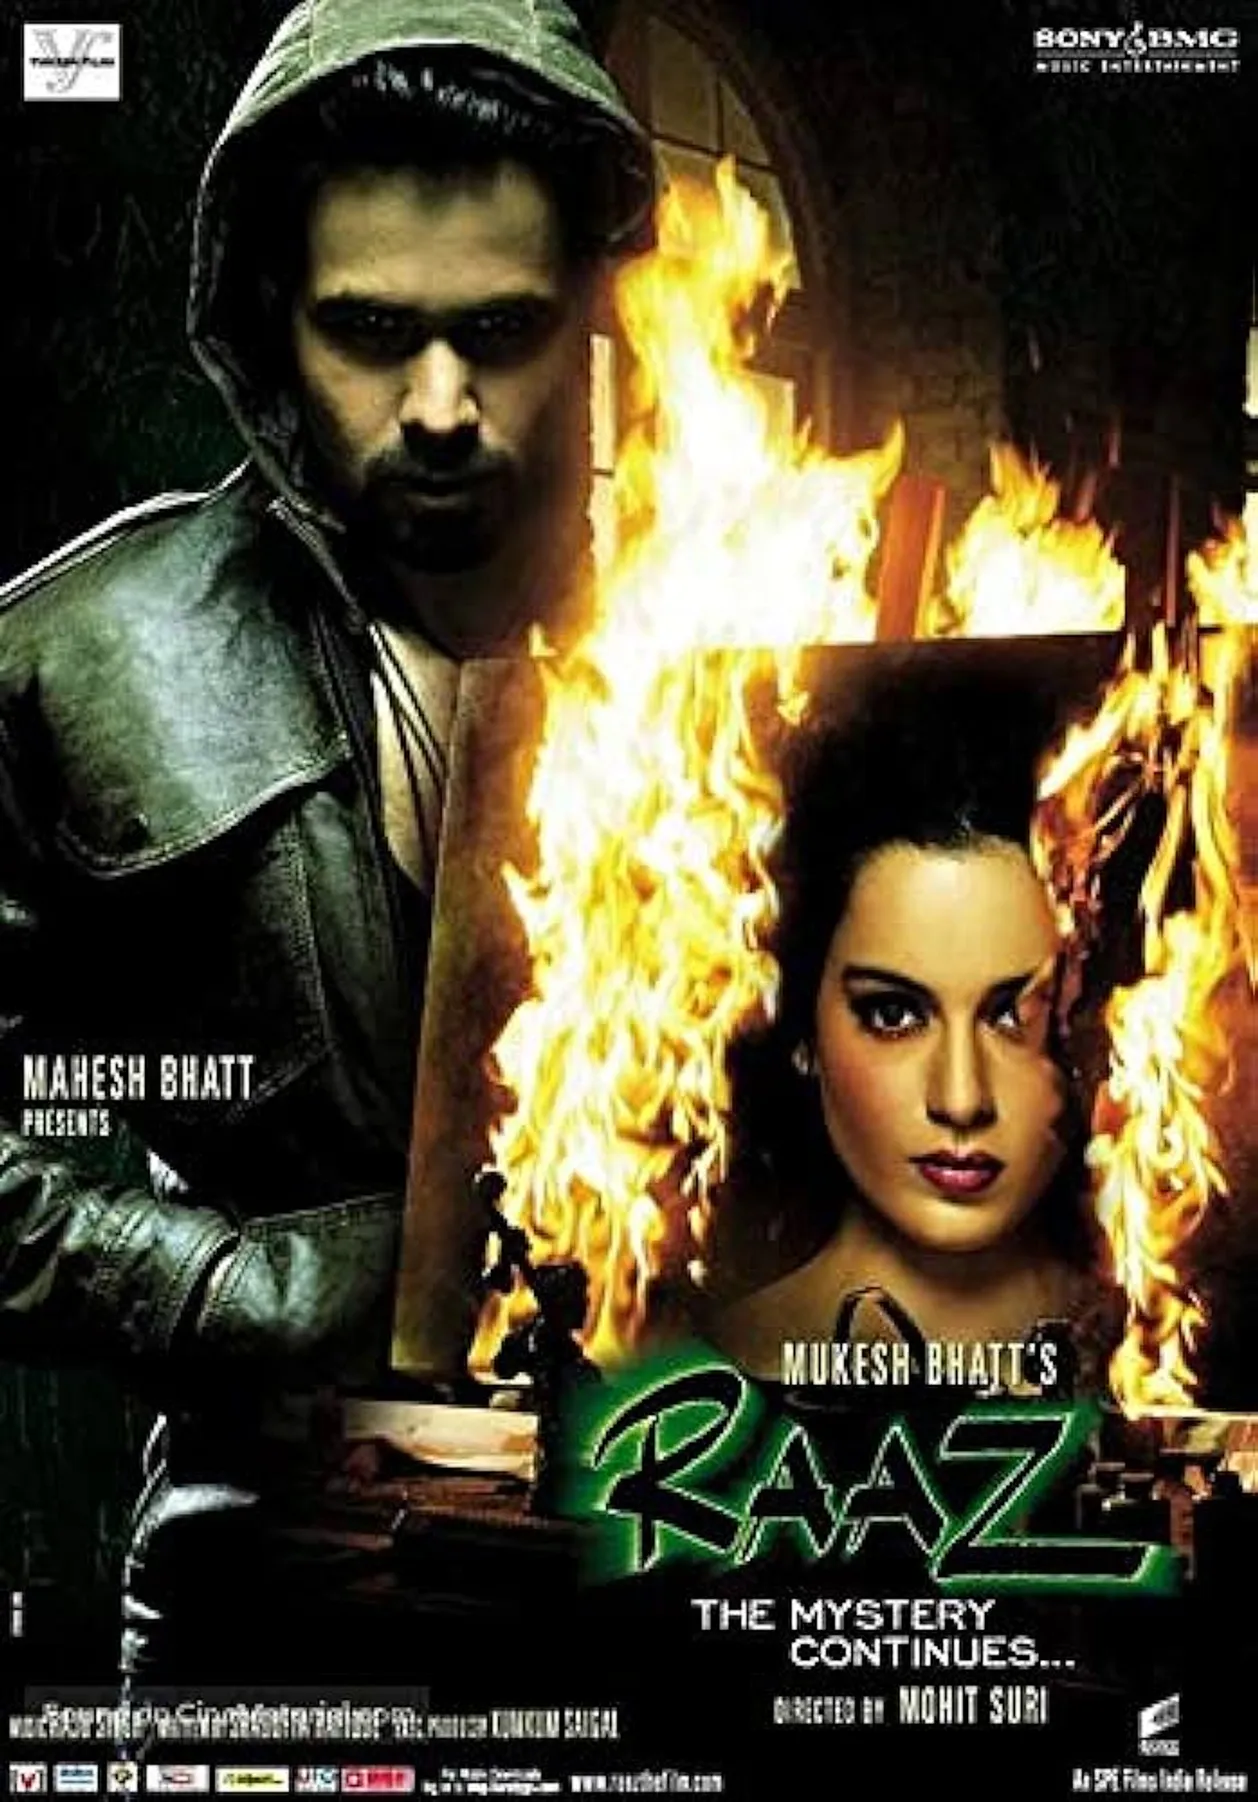 Raaz- The Mystery Continues: Amazon.in: Emraan Hashmi, Kangana Ranaut,  Adhyayan Suman, Mohit Suri: Movies & TV Shows